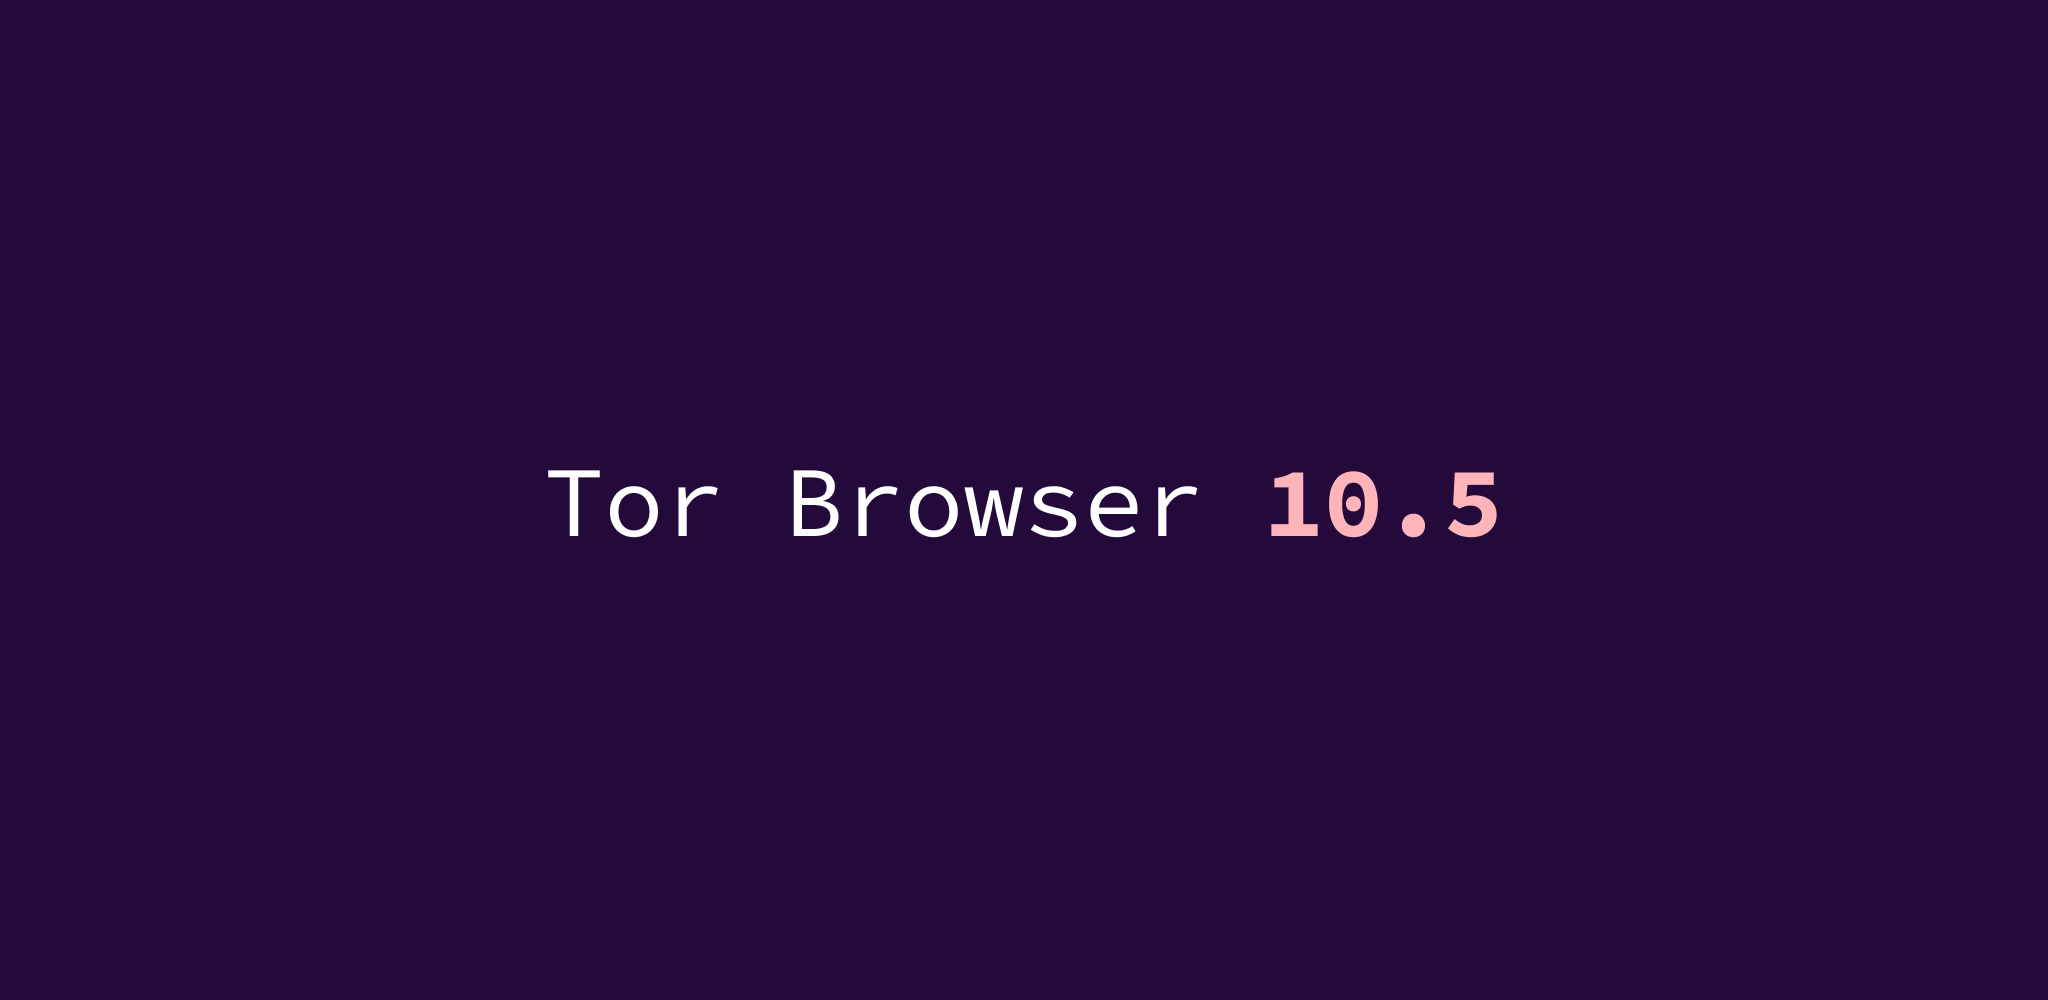 Tor browser папка gydra пожелтел лист марихуаны